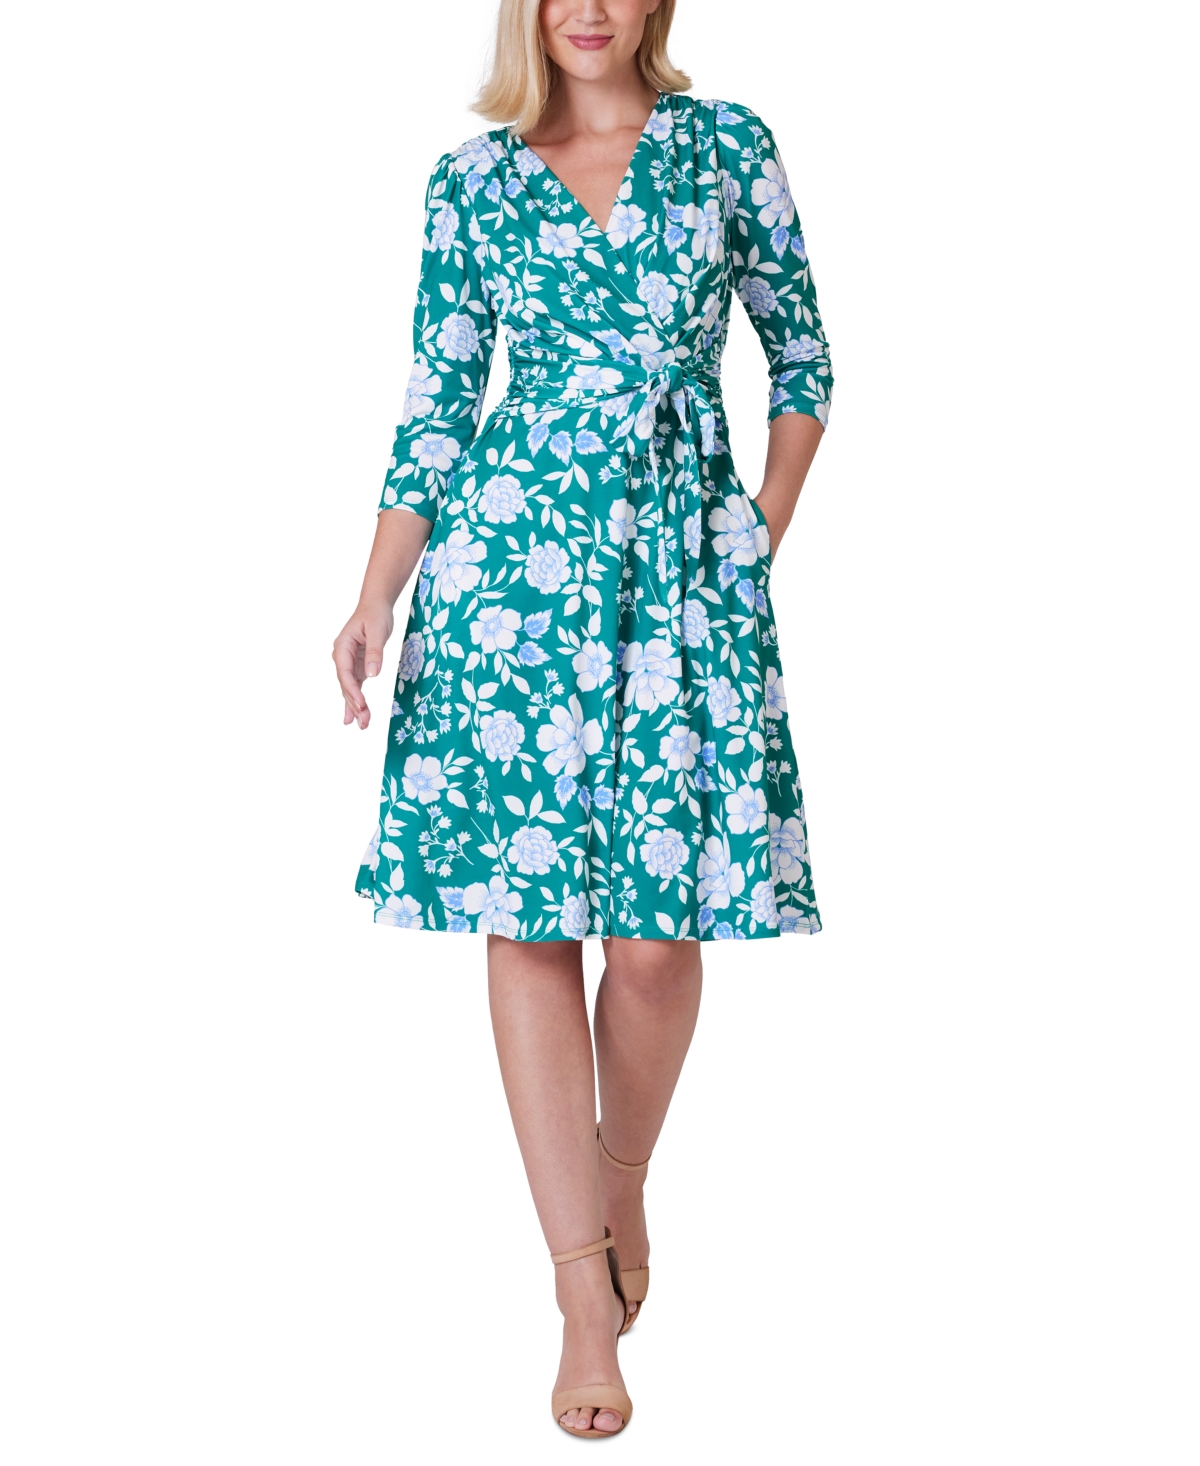 Women's Floral-Print 3/4-Sleeve Wrap Dress - Green Mult